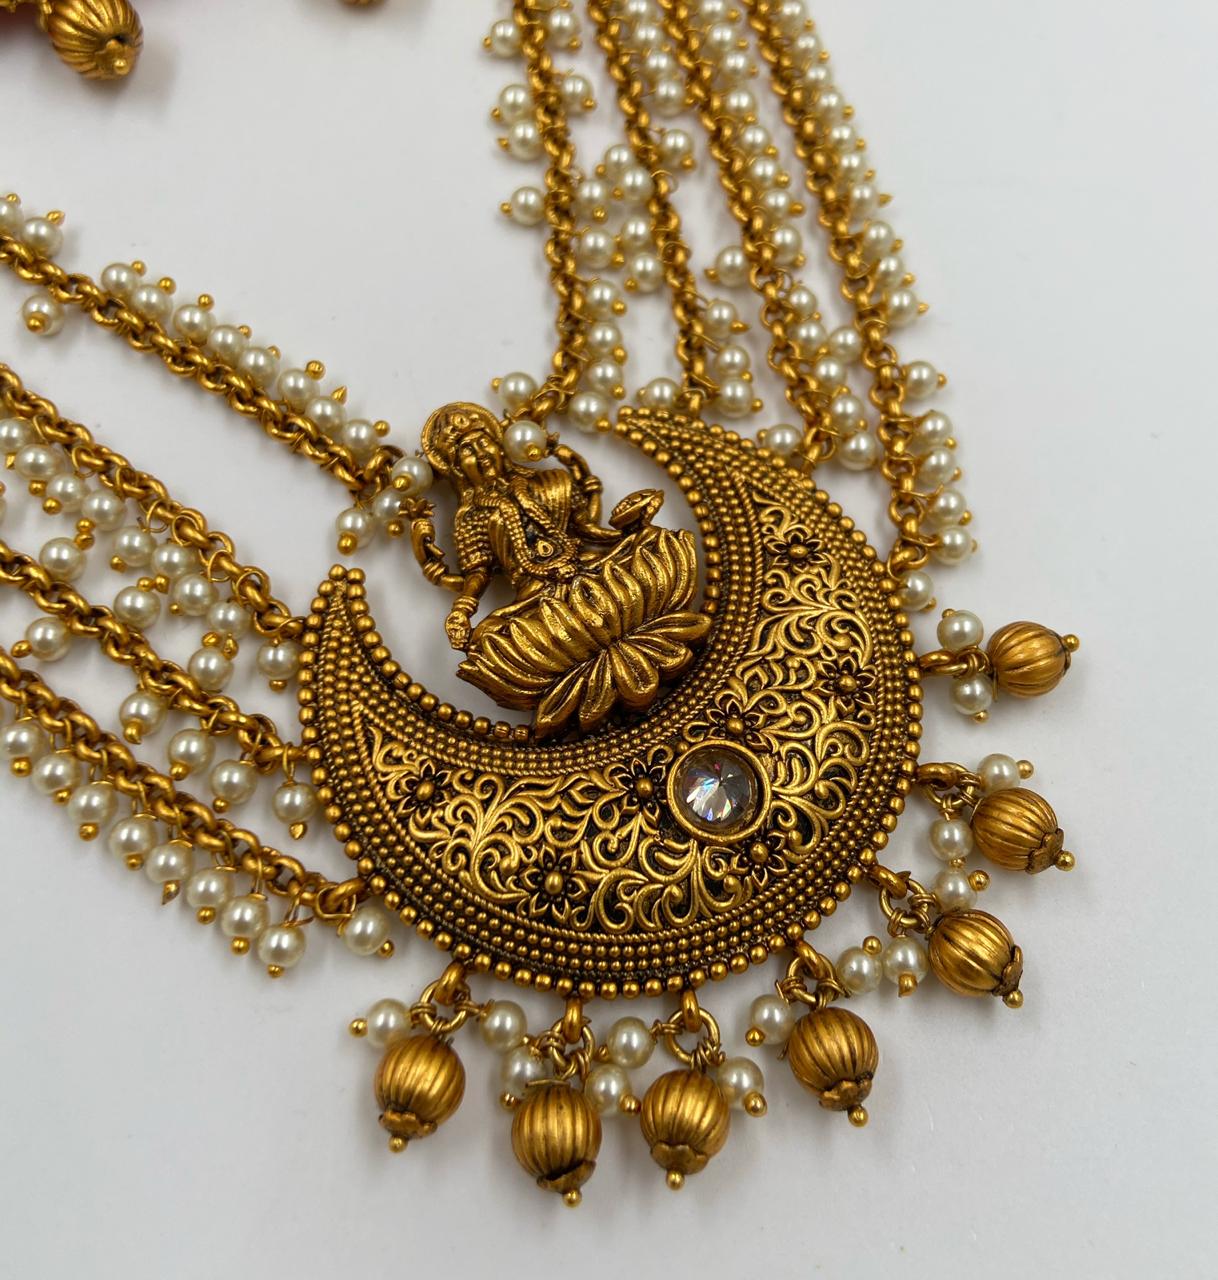 Designer Antique Goddess Lakshmi Necklace Set For Ladies By Gehna Shop Temple Necklace Sets